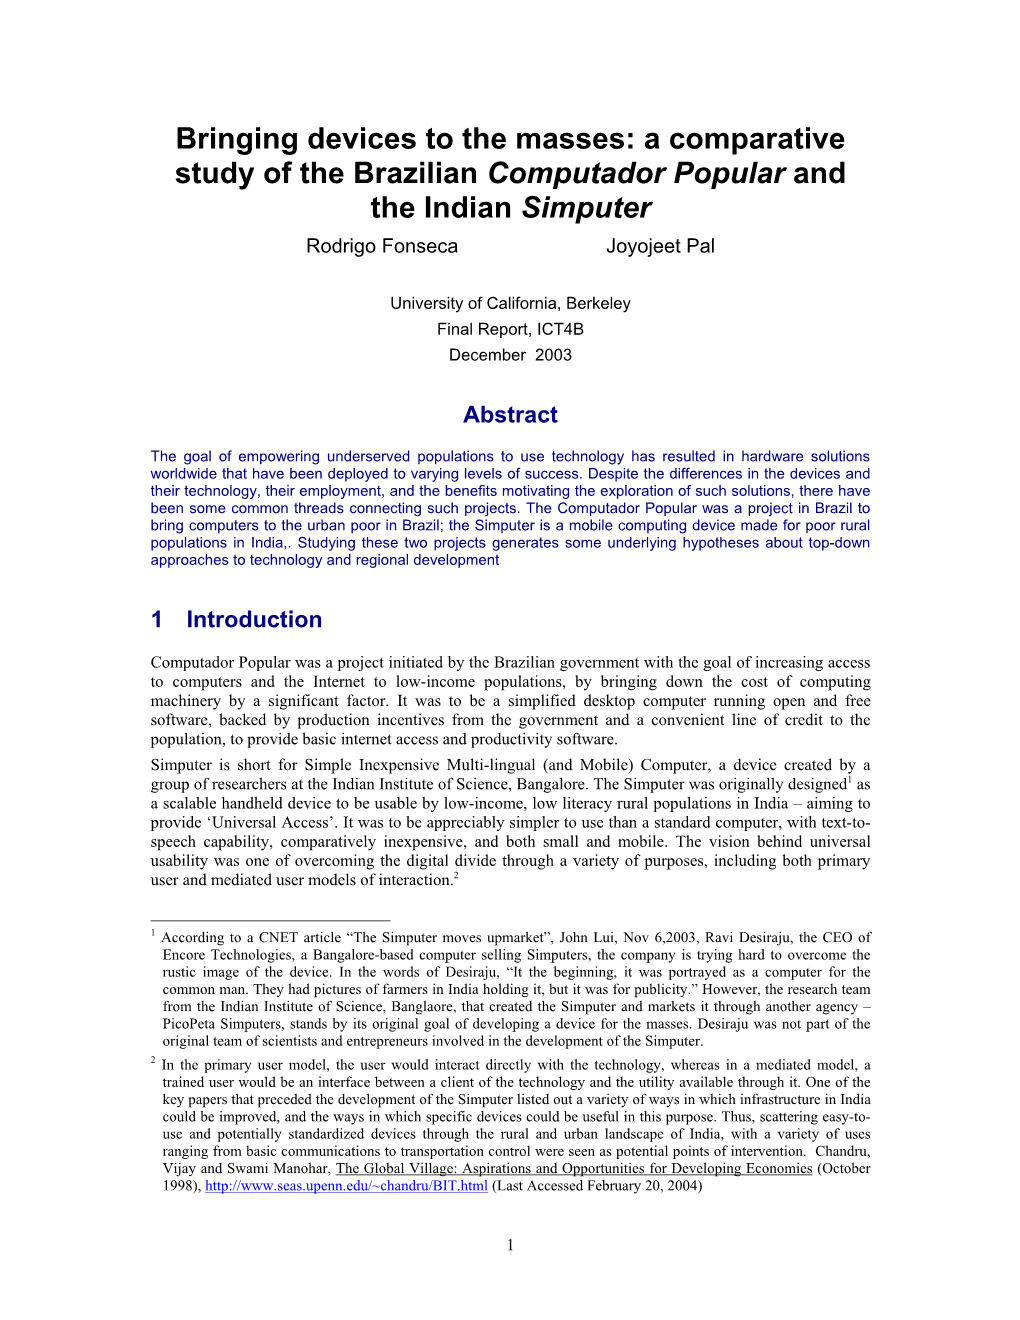 Bringing Devices to the Masses: a Comparative Study of the Brazilian Computador Popular and the Indian Simputer Rodrigo Fonseca Joyojeet Pal